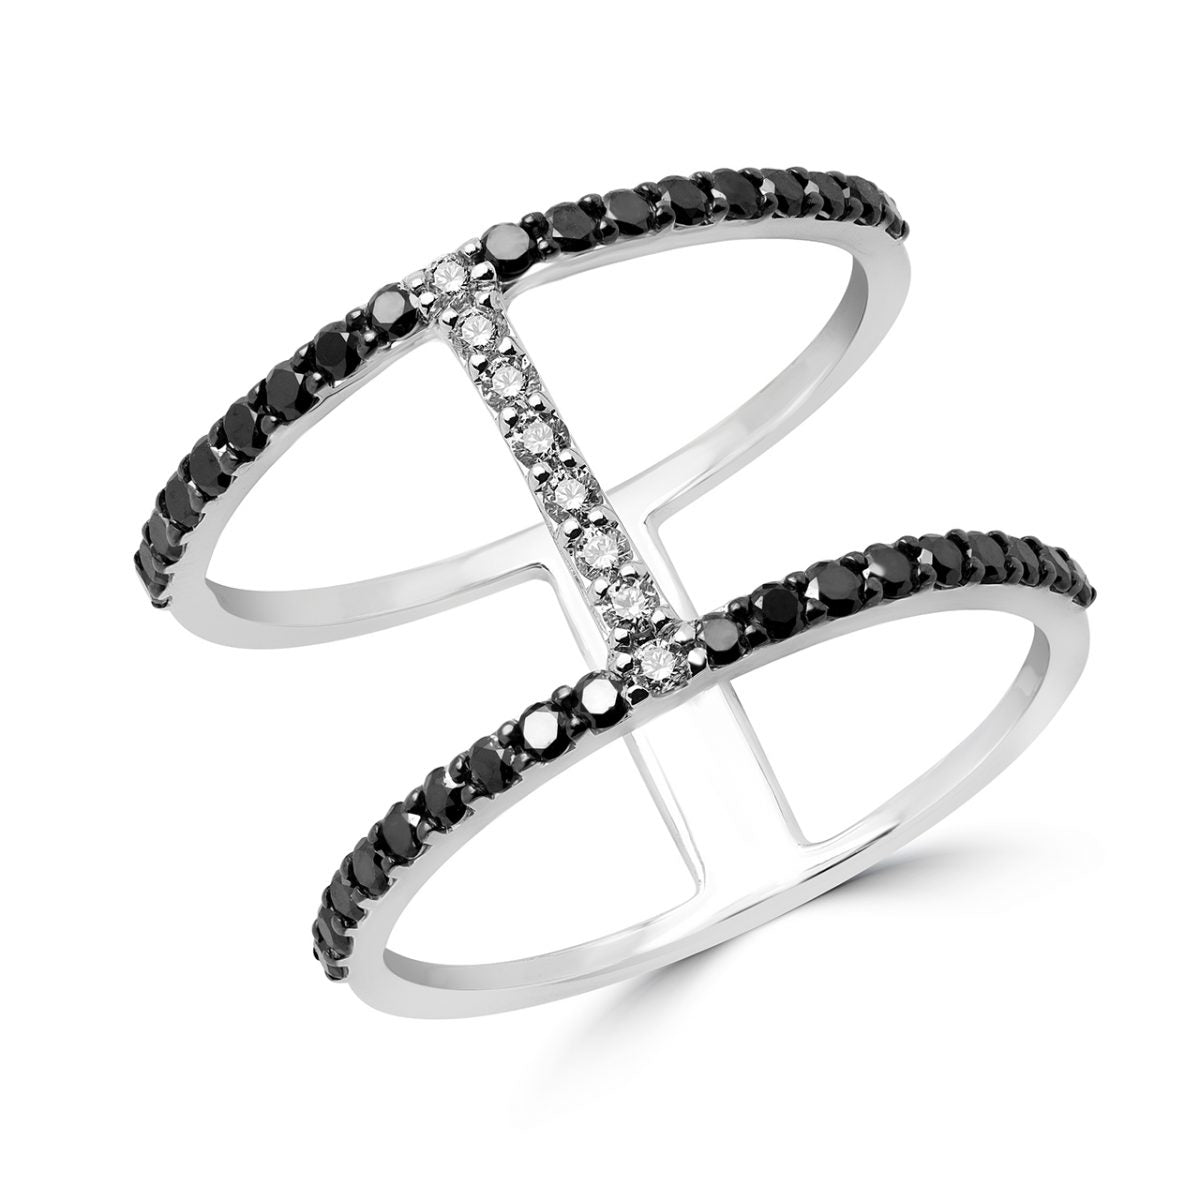 Semi-eternity black and white diamond ring in 14k white gold